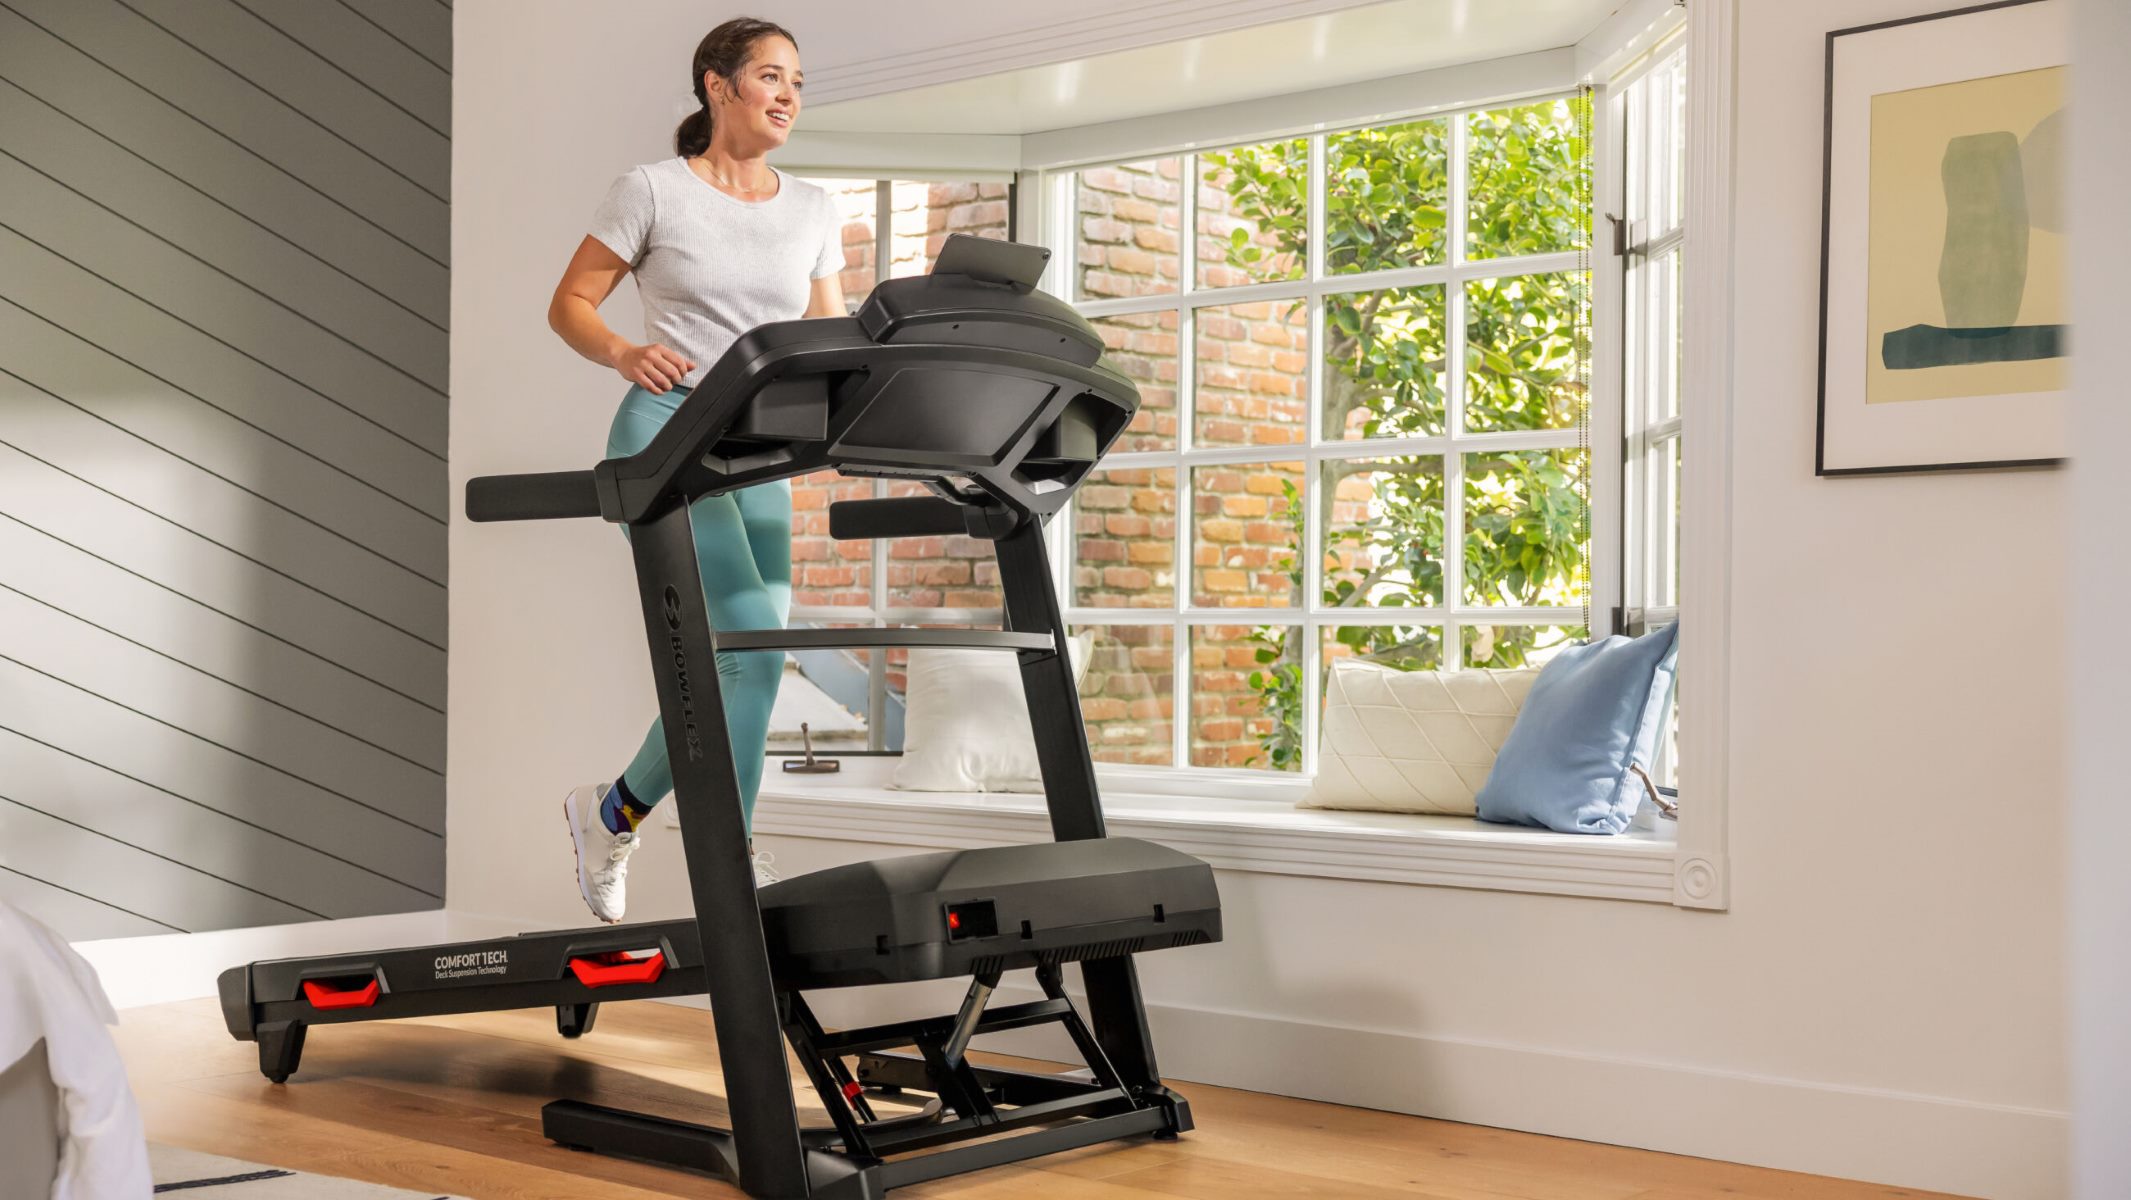 How To Move A Bowflex Treadmill